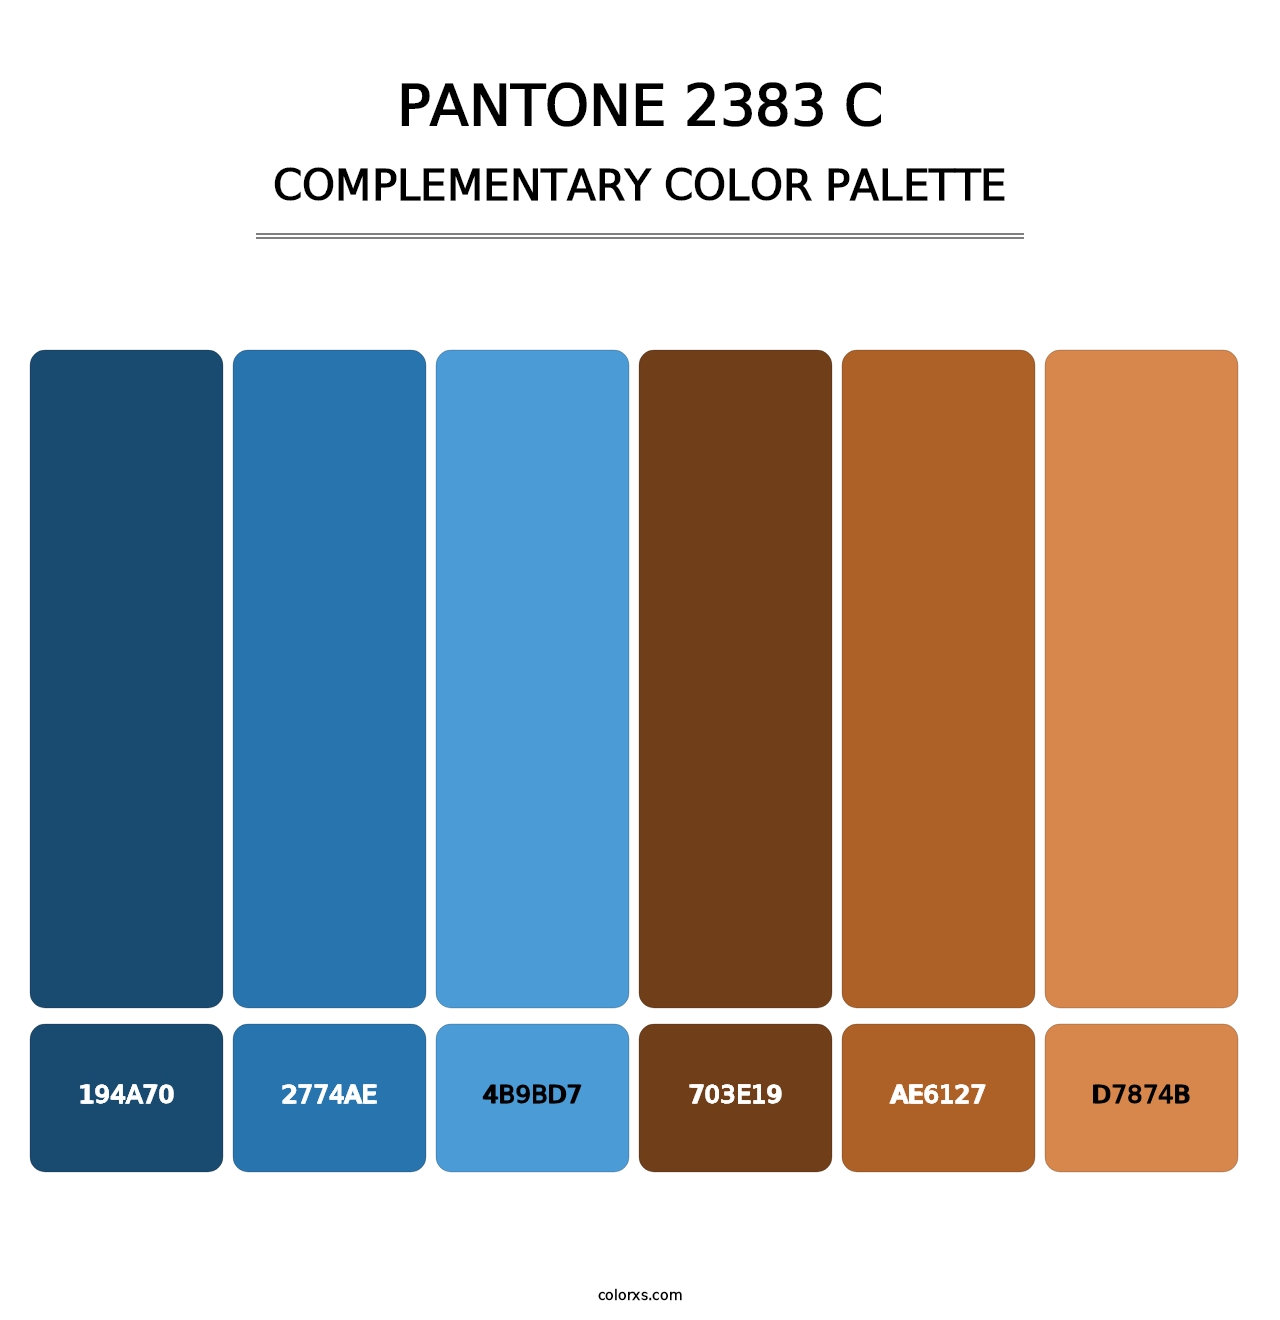 PANTONE 2383 C - Complementary Color Palette